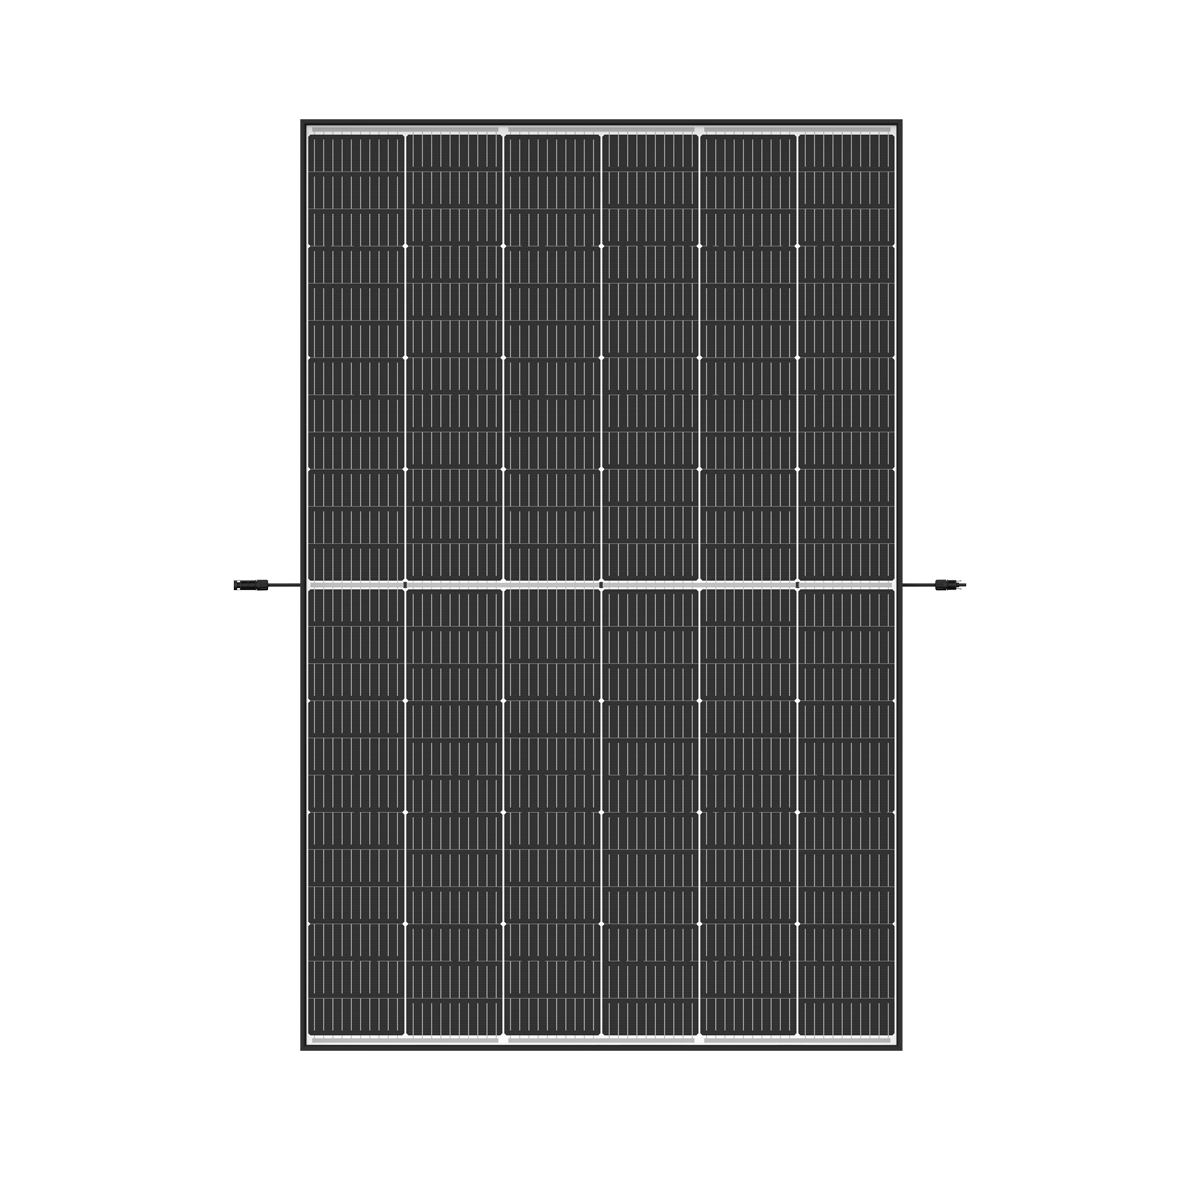 440W Trina Vertex S+ glass glass solar module BLACK FRAME